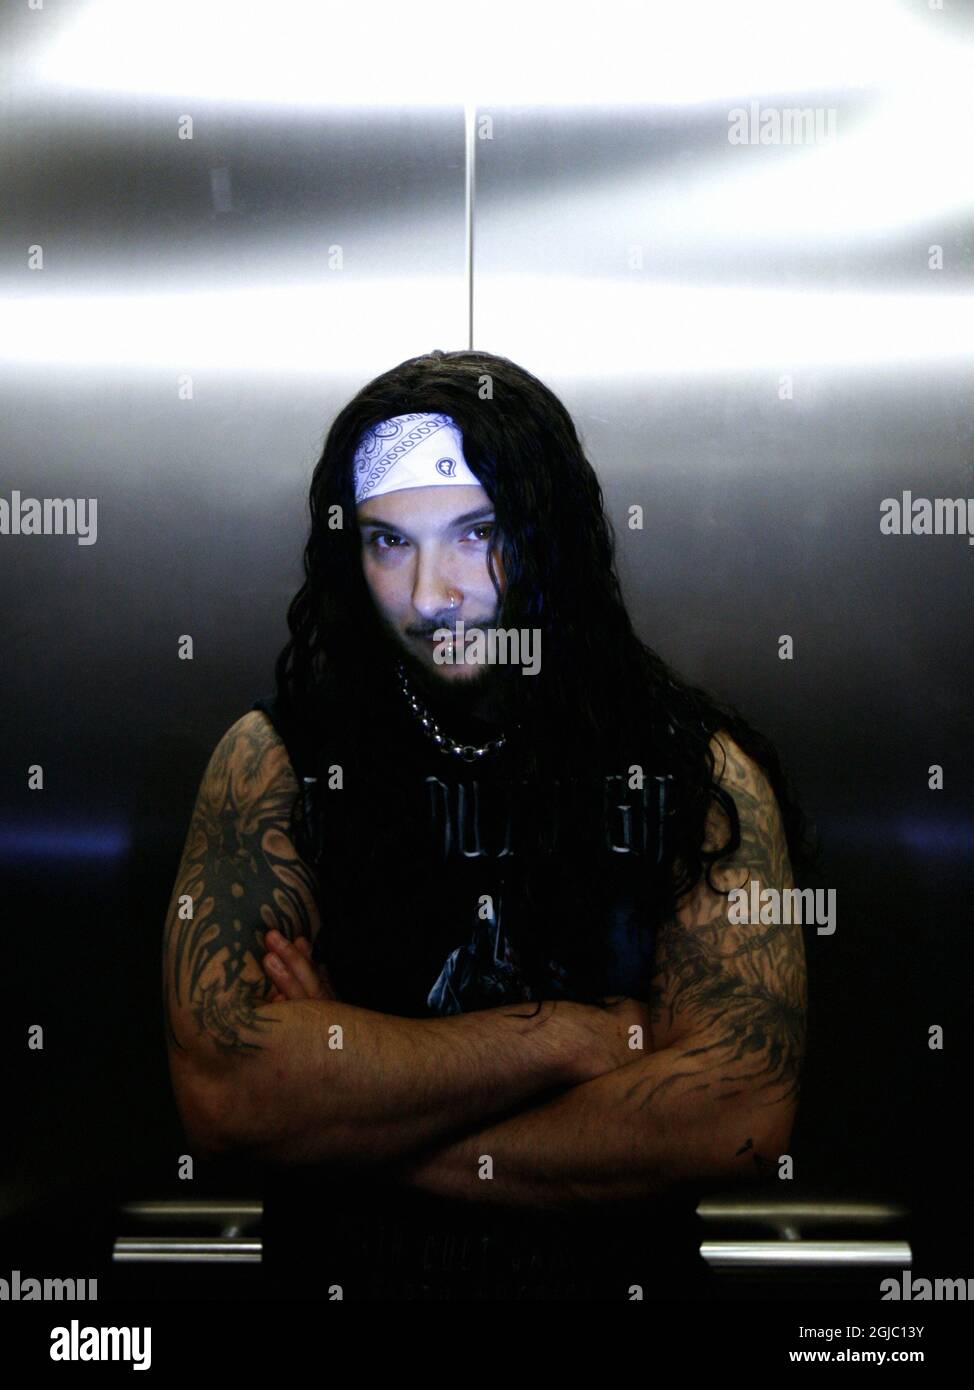 Happy Birthday to Shagrath of Dimmu Borgir. Photo by @metalvisuals. ©️  MetalVisuals.com.